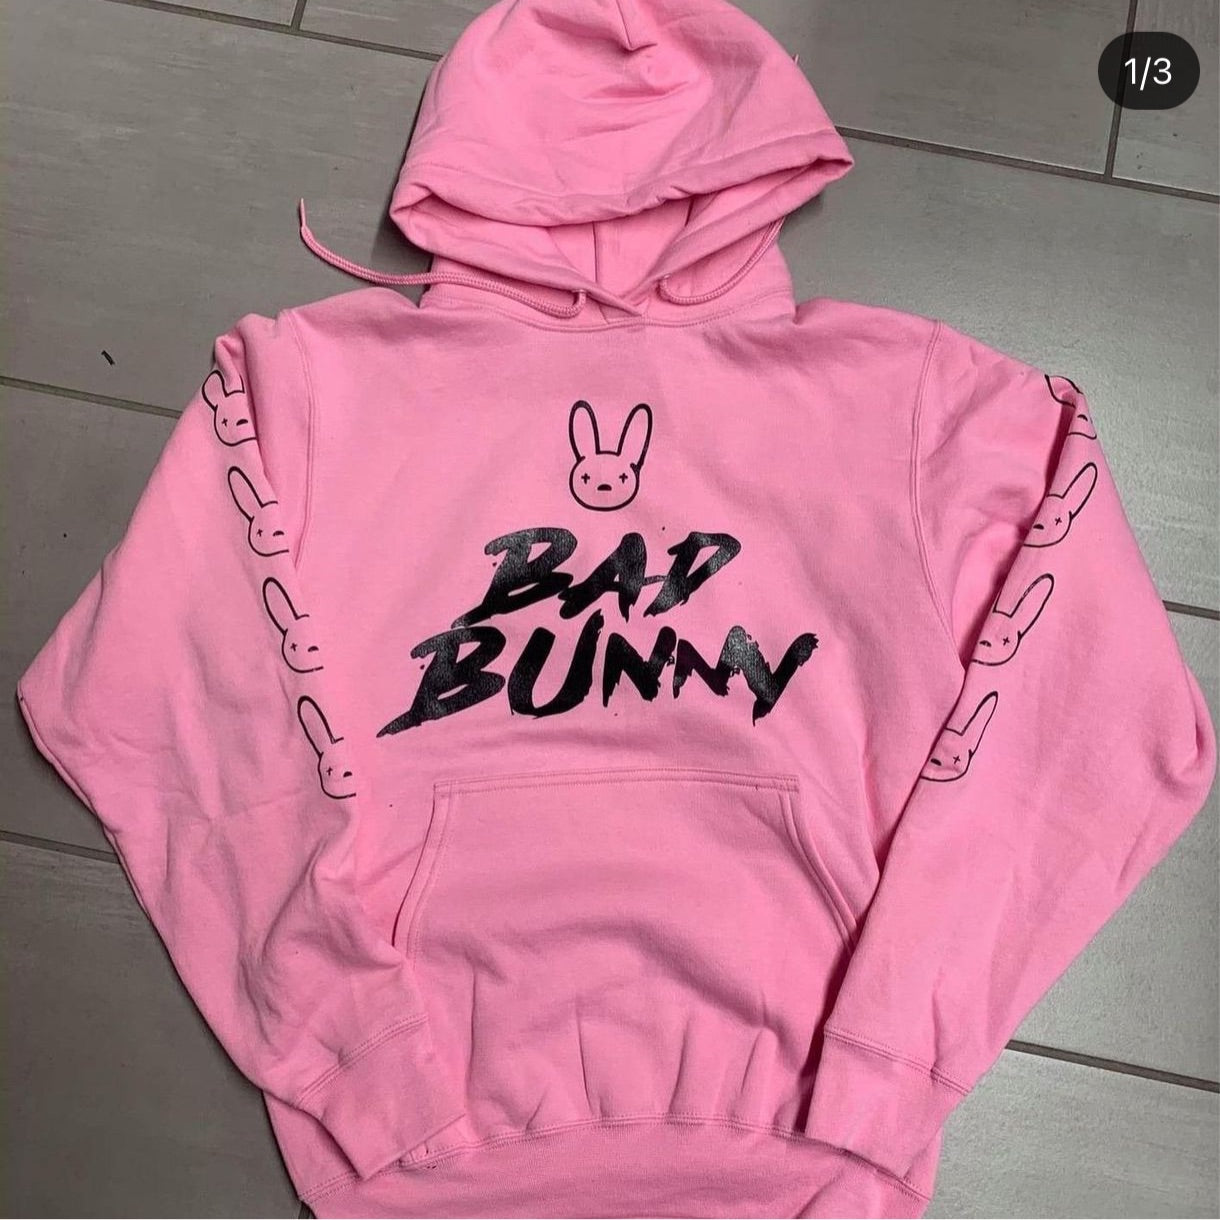 Bad bunny - pink